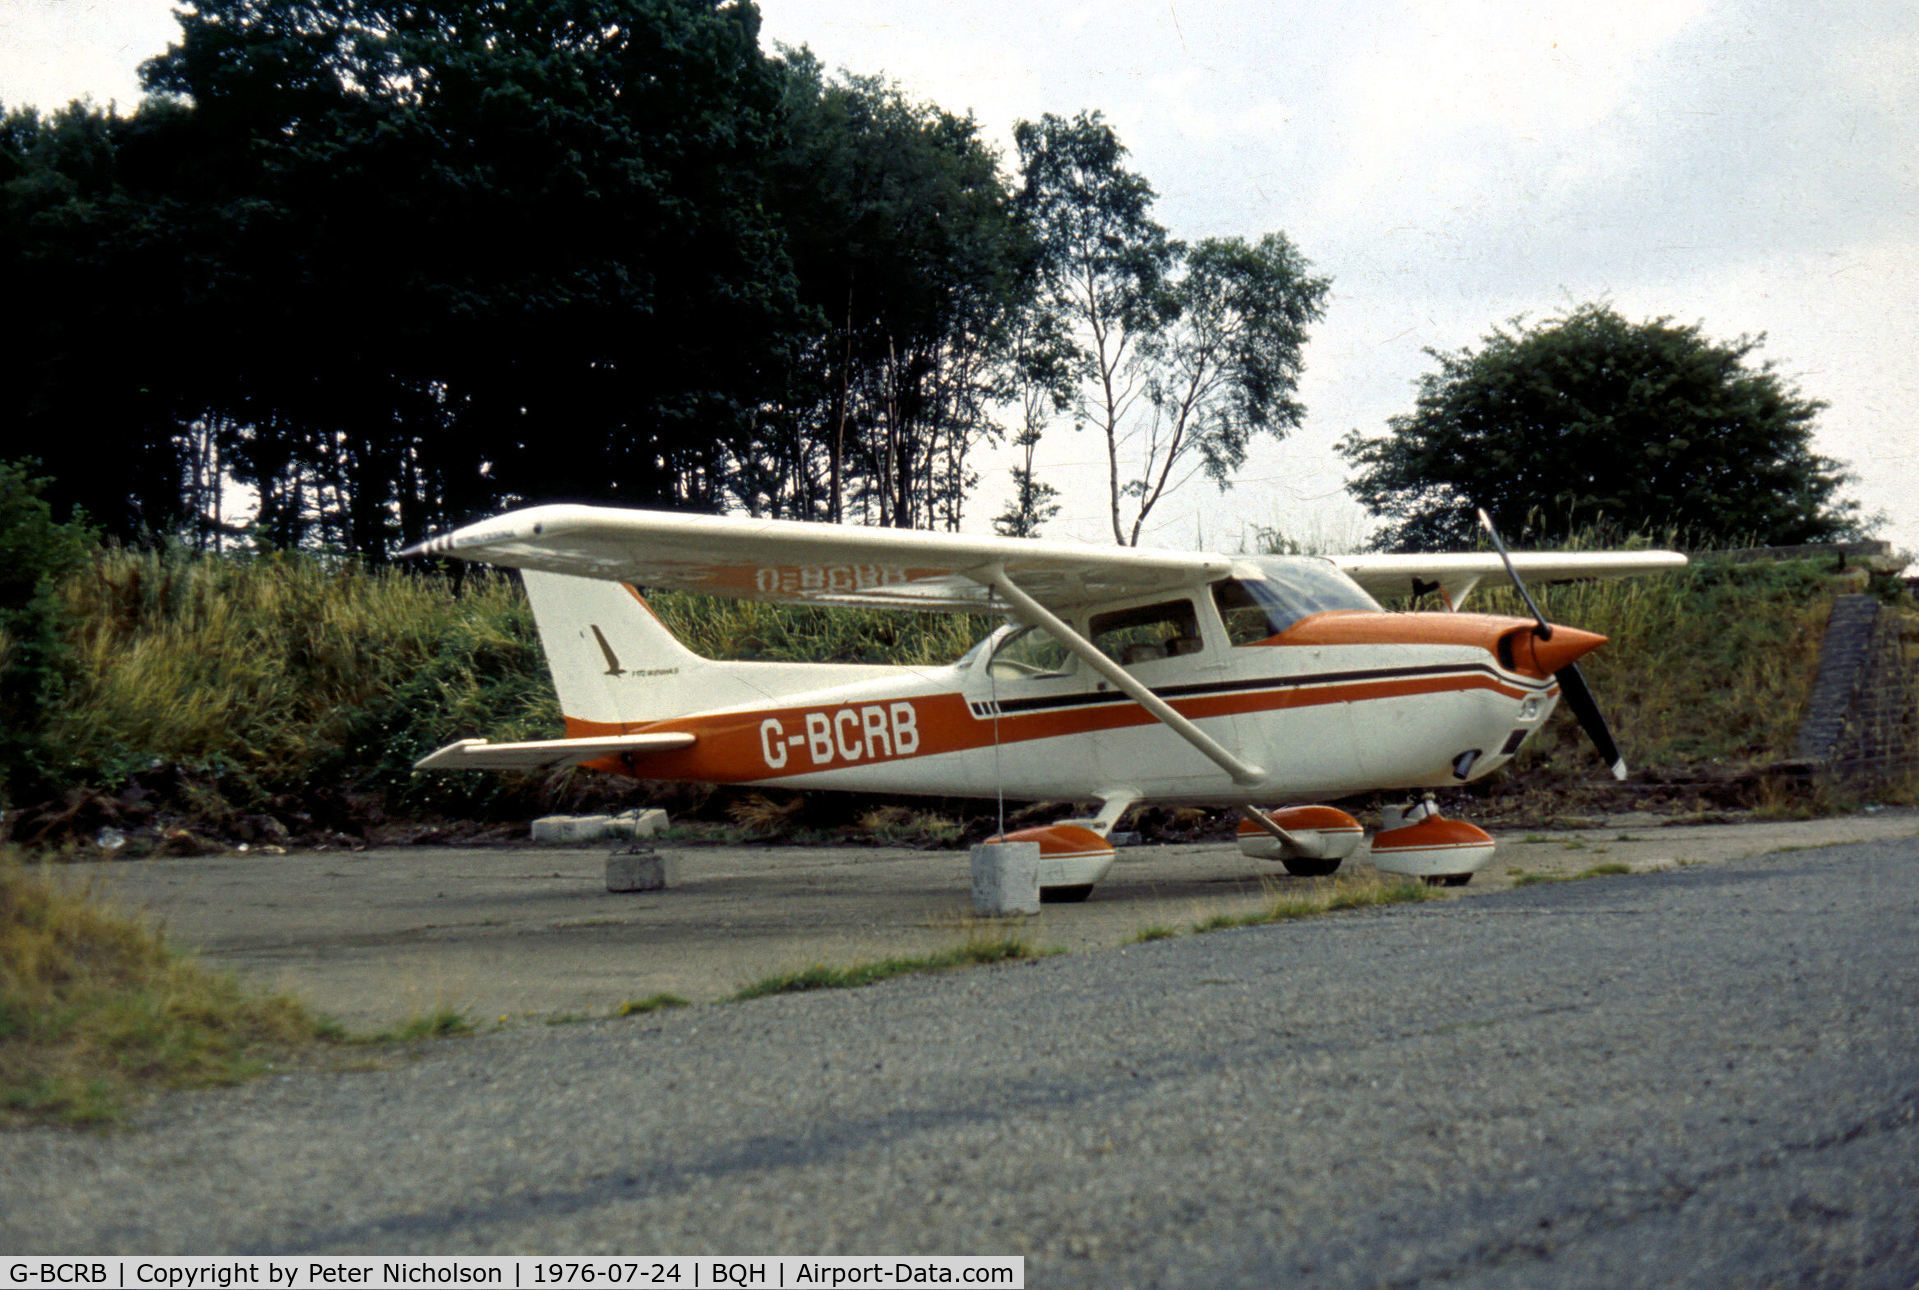 G-BCRB, 1974 Reims F172M Skyhawk Skyhawk C/N 1259, Reims F.172M Skyhawk resident at Biggin Hill as seen there in the Summer of 1976.